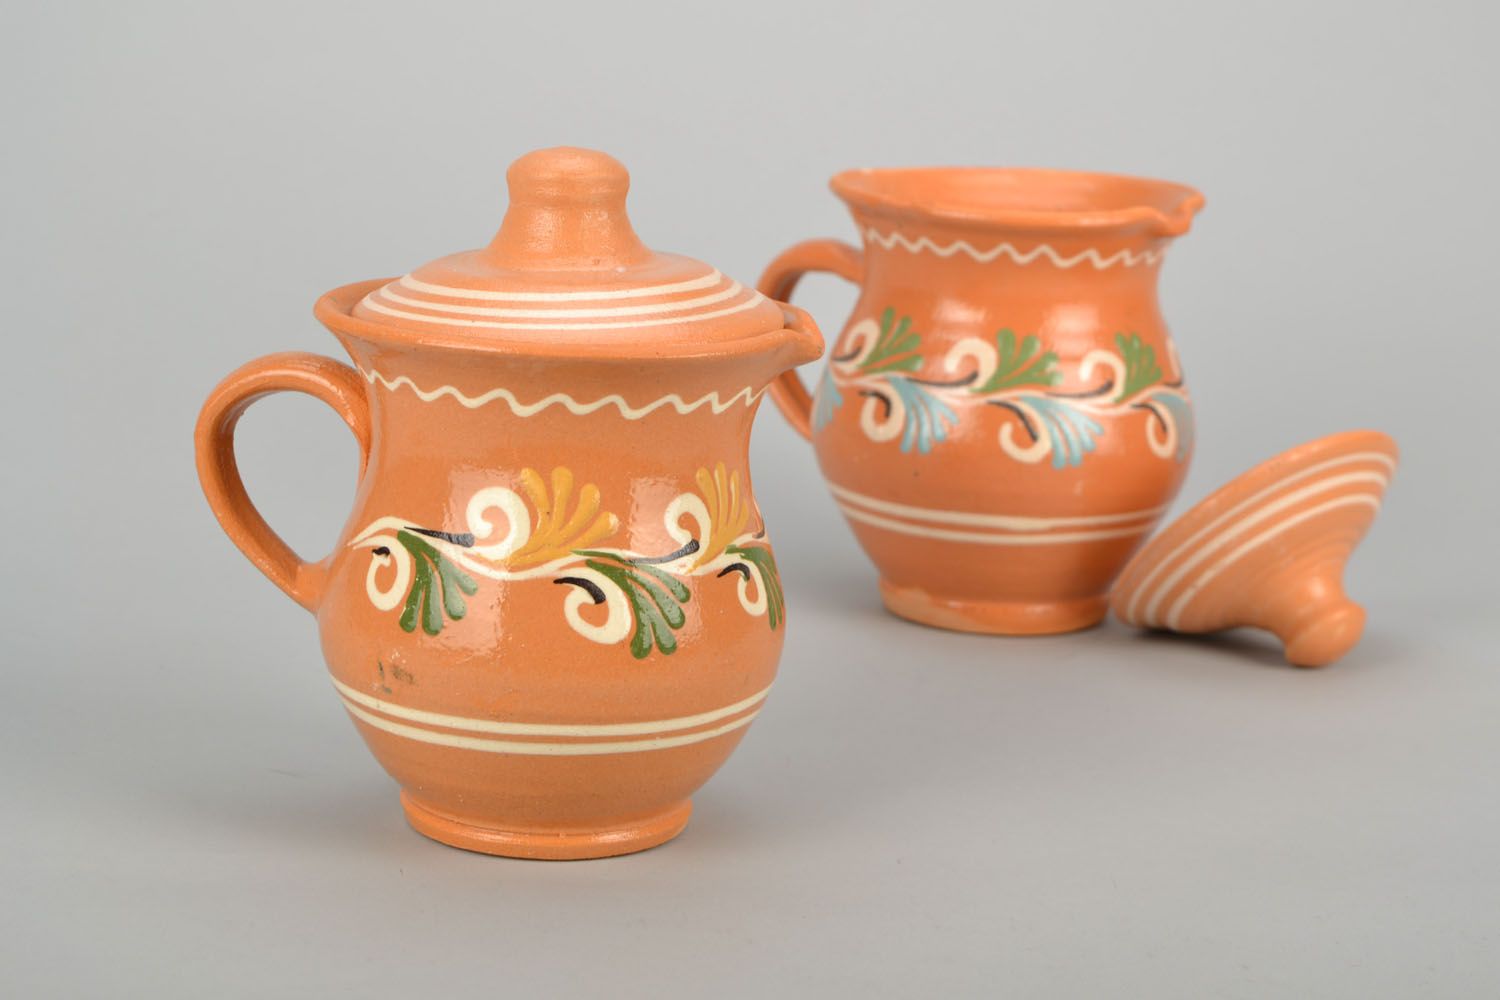 12 oz ceramic porcelain creamer pitcher with hand-painted floral design 1,23 lb photo 1